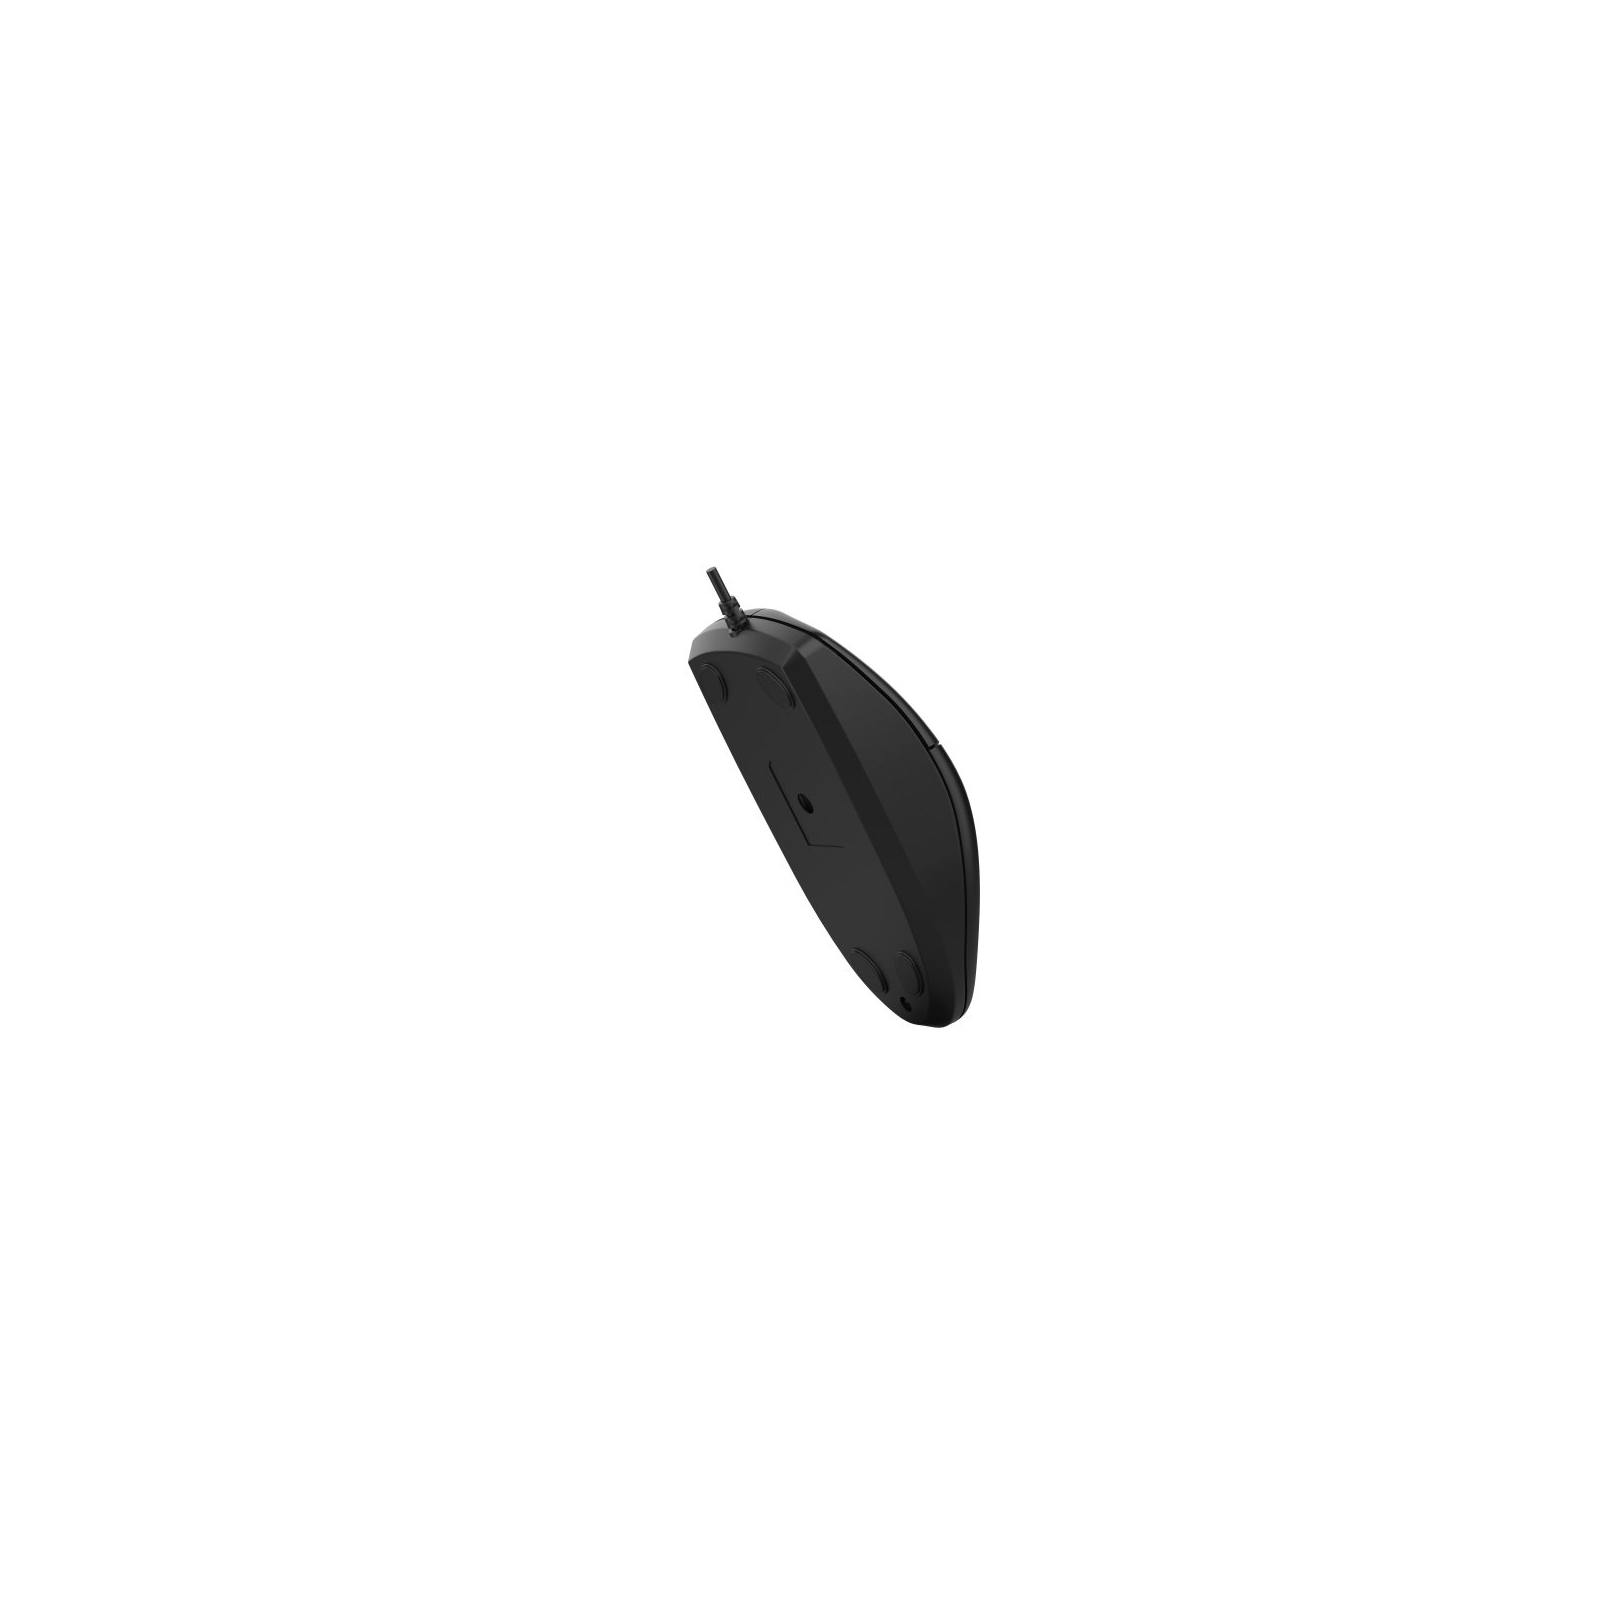 Мышка A4Tech N-530S USB White (4711421988315) изображение 9